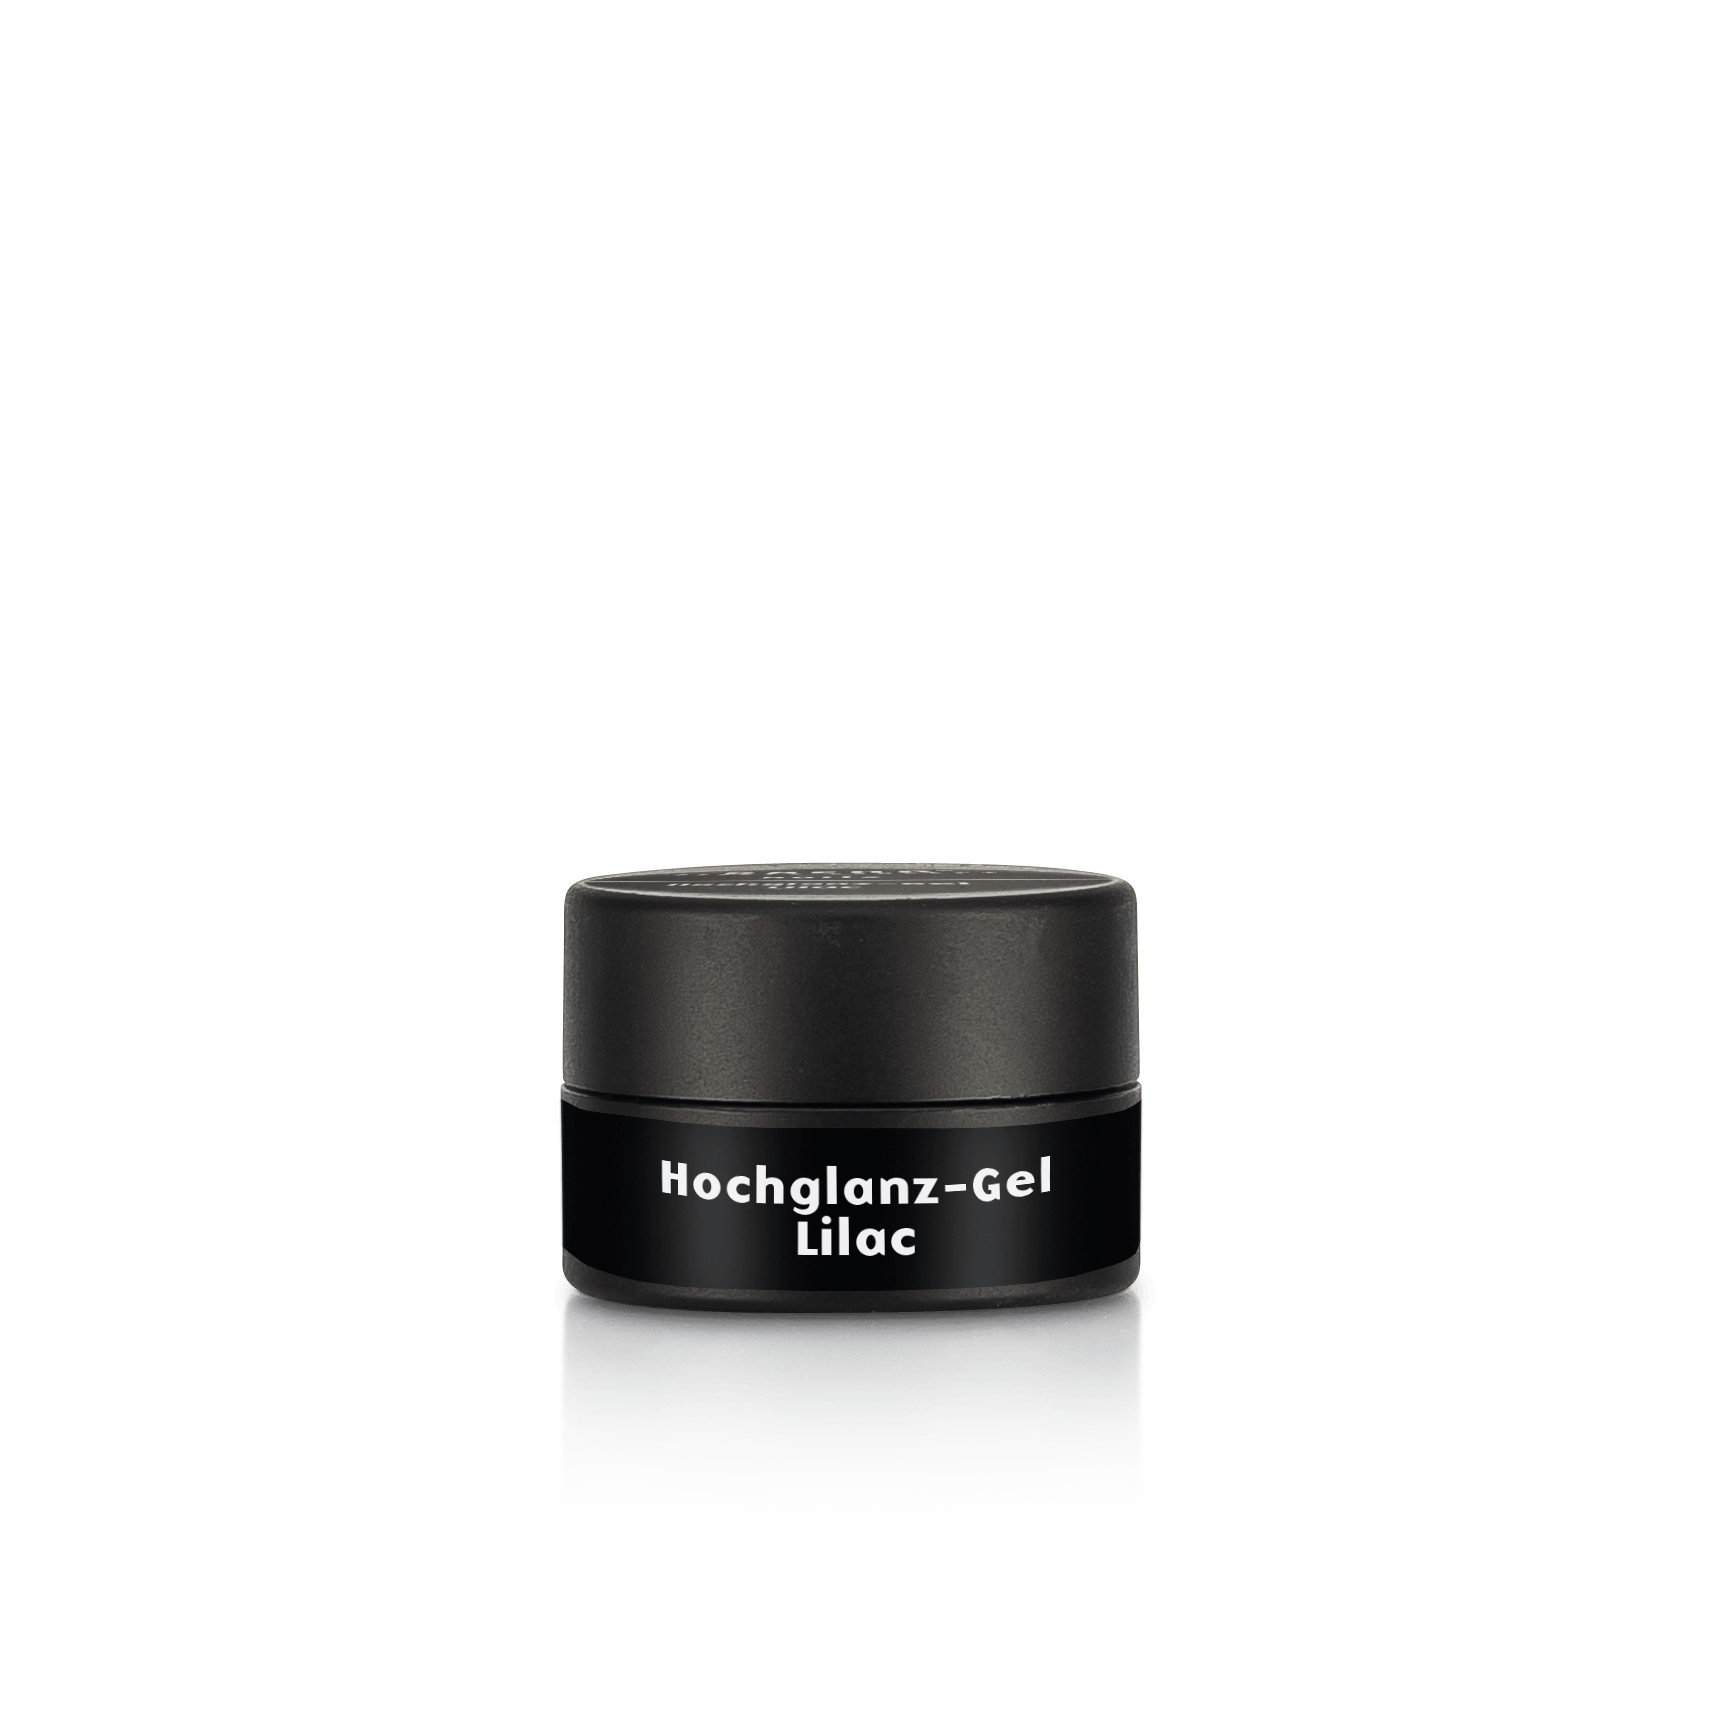 BAEHR BEAUTY CONCEPT - NAILS Hochglanz-Gel Lilac 5 g